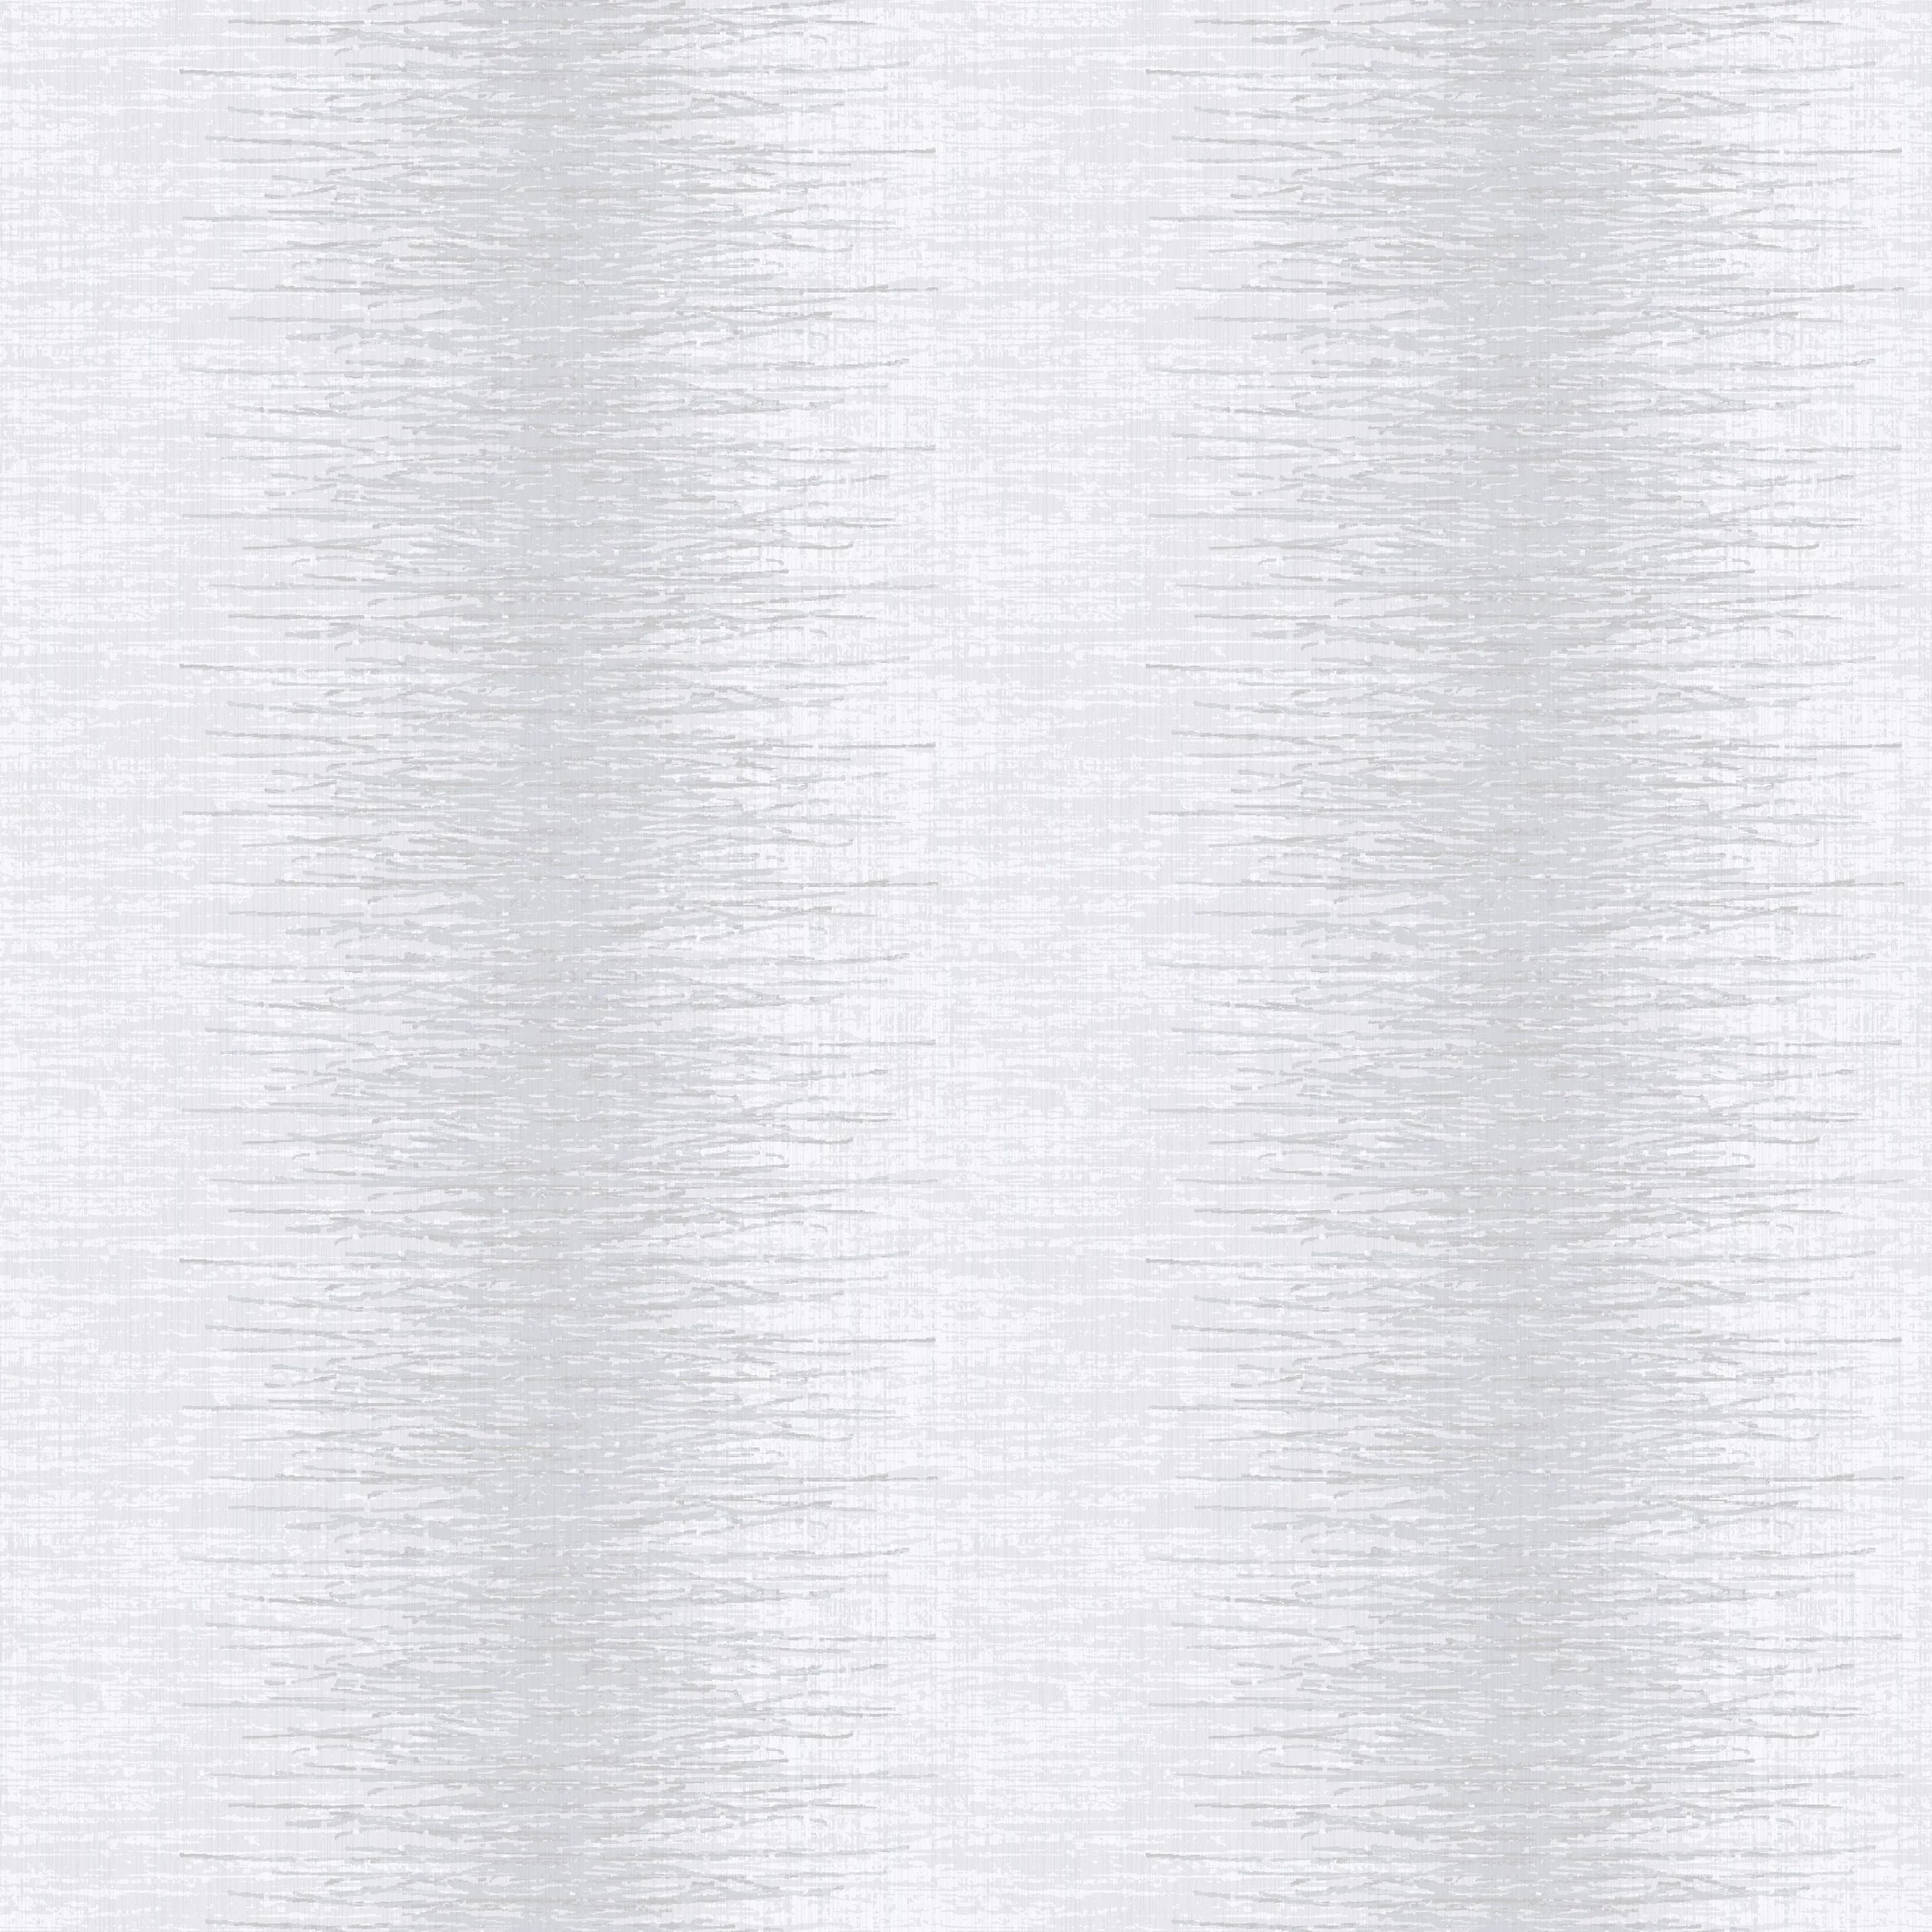 Julien MacDonald Illusion Striped Silver glitter effect Embossed Wallpaper